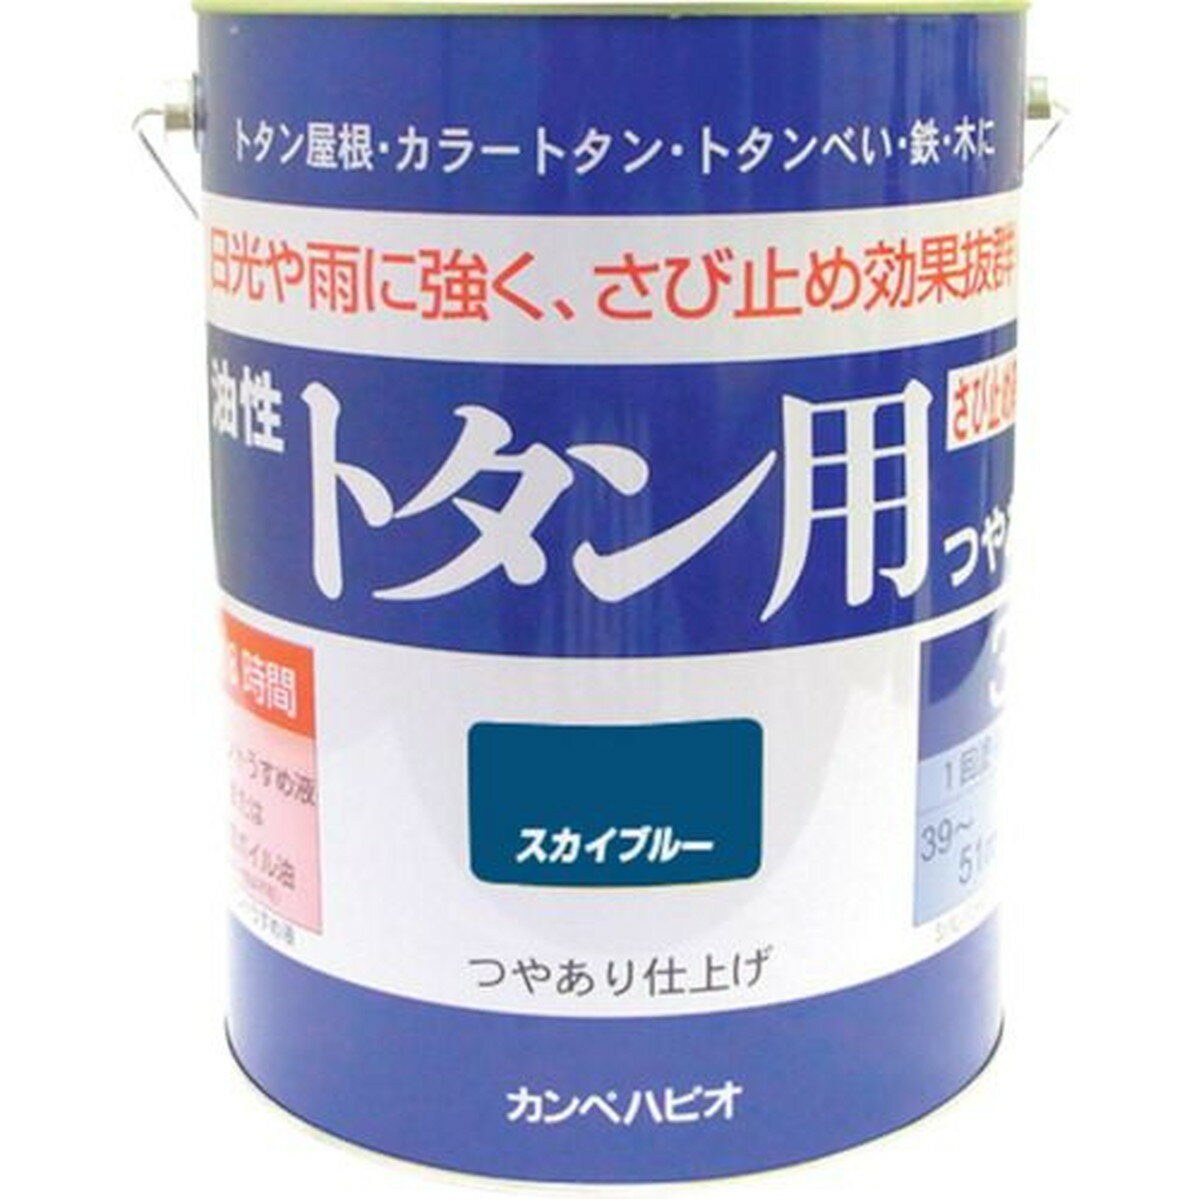 KANSAI カンペ 油性トタン用3Lスカイブルー 1缶 (130-5993)